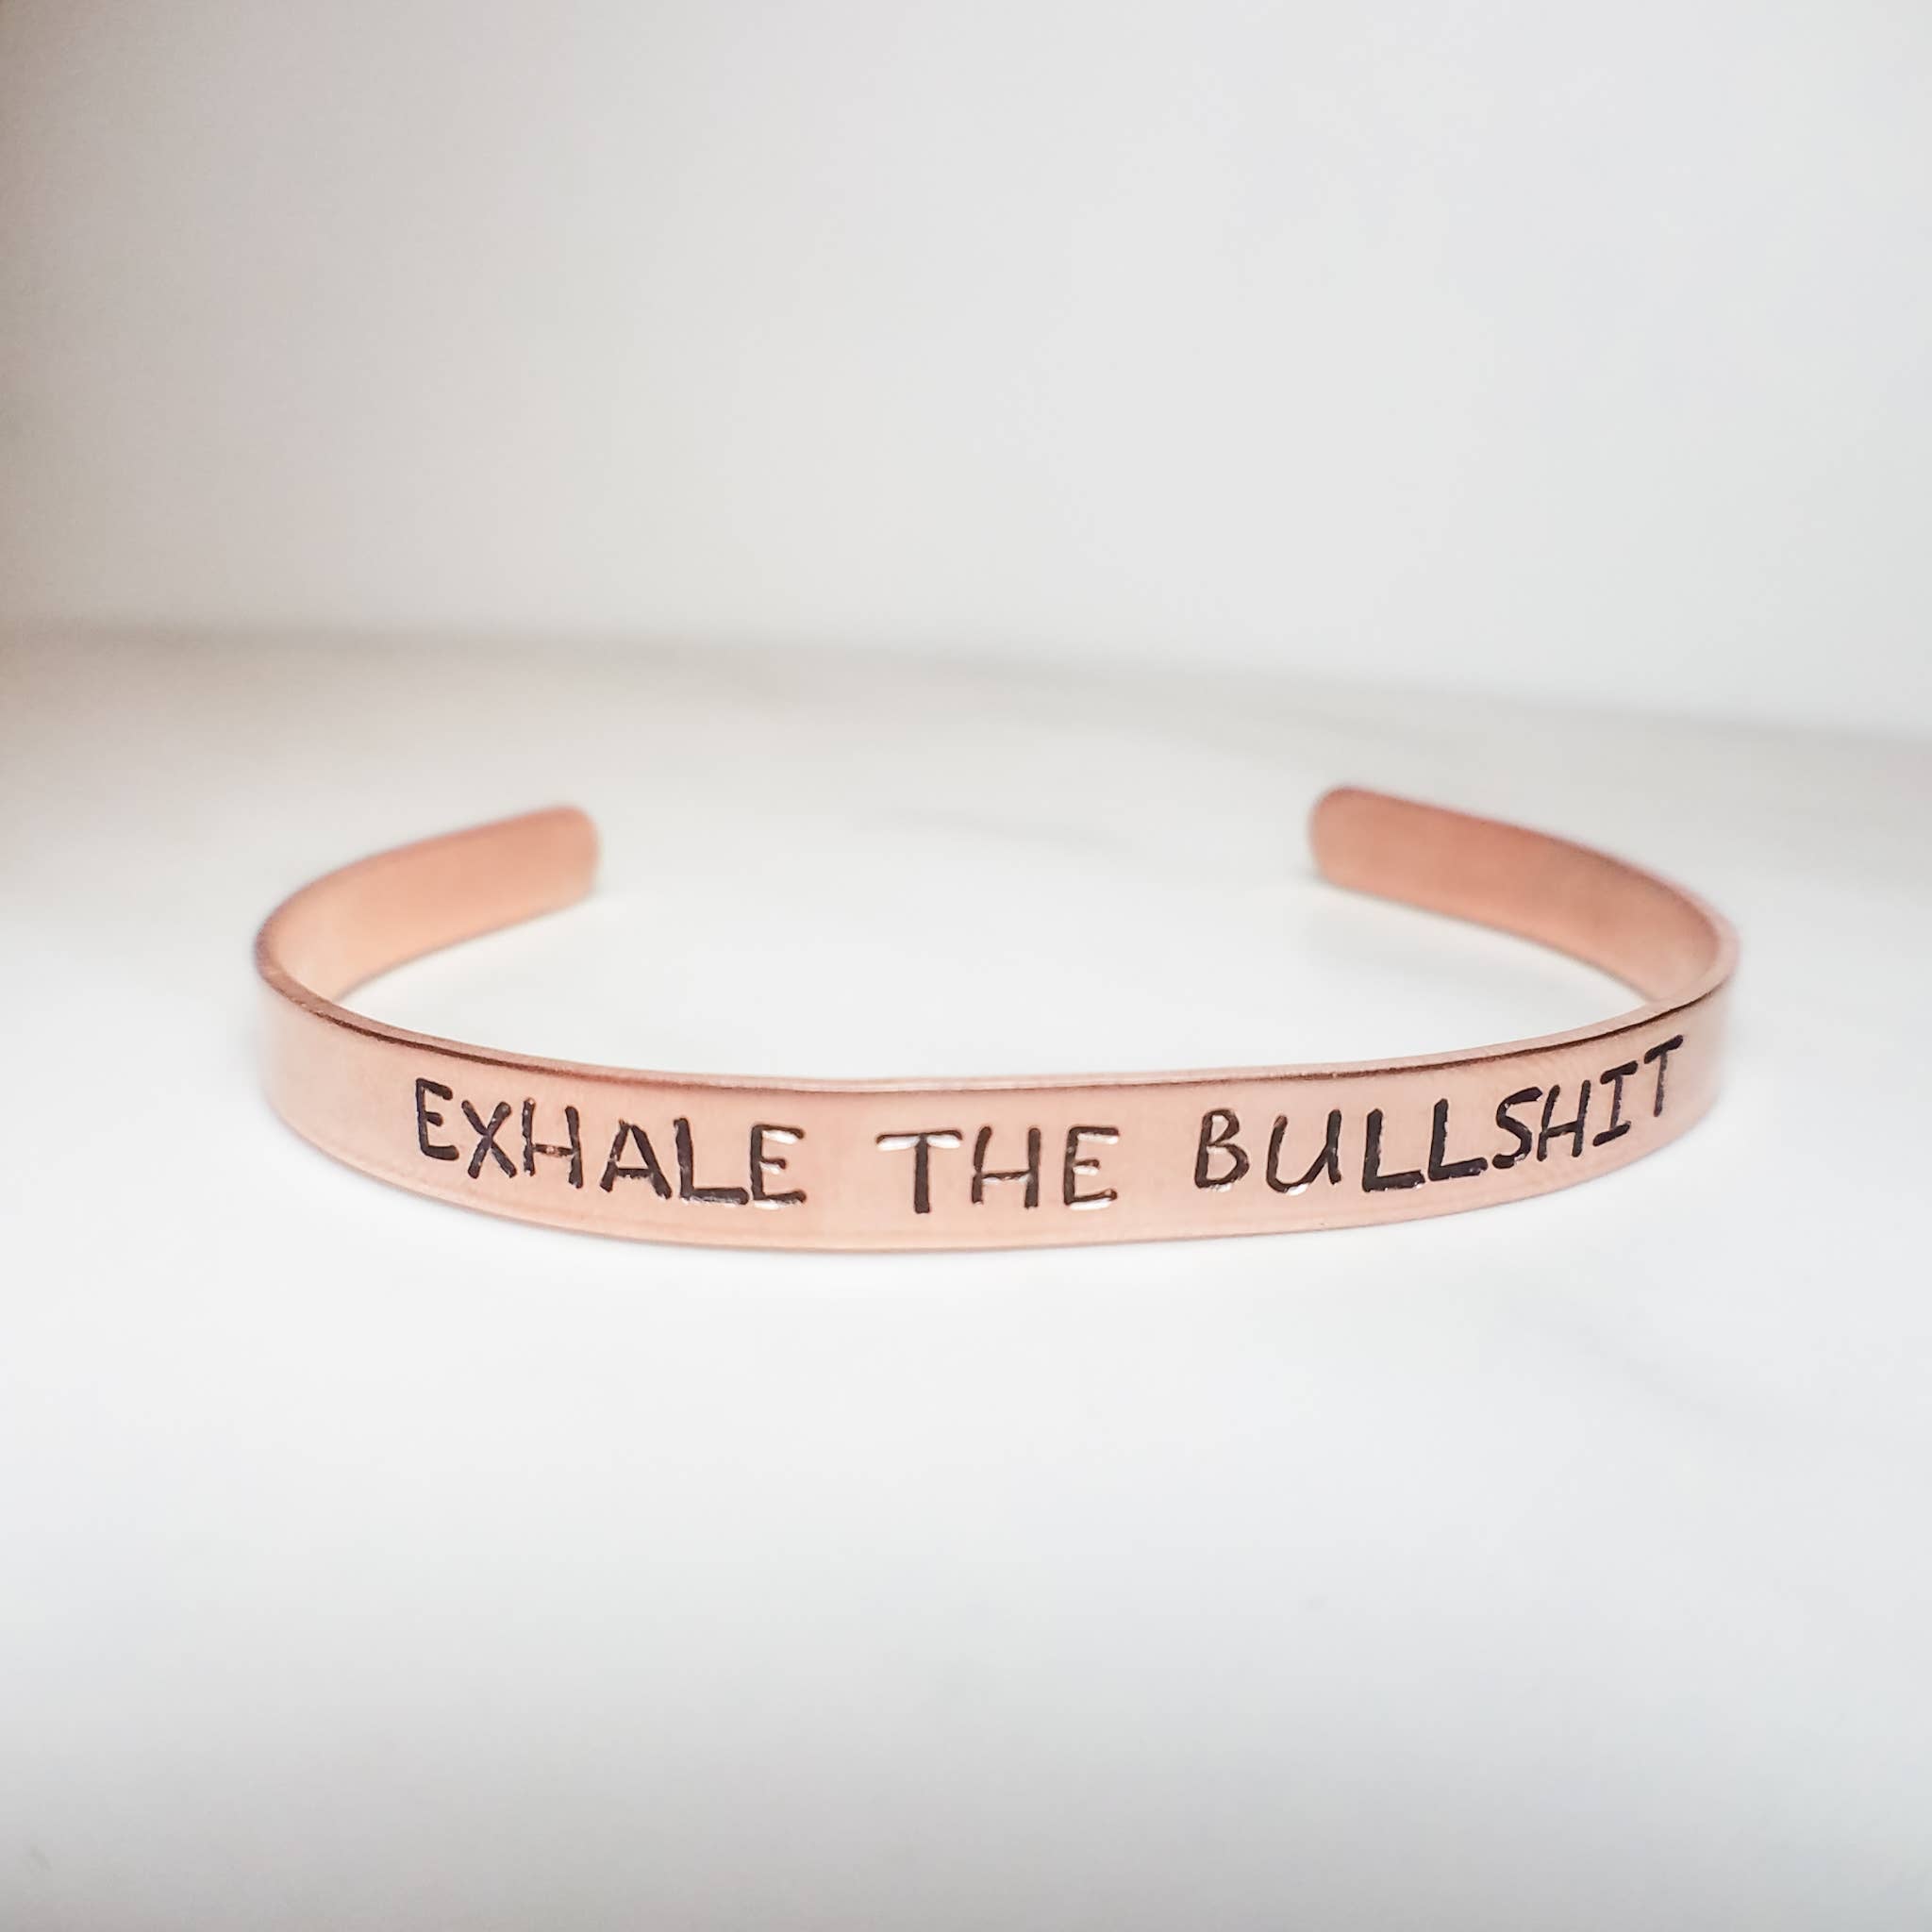 MKayAccessories - Exhale the bullshit Bracelet, adjustable stamped cuff